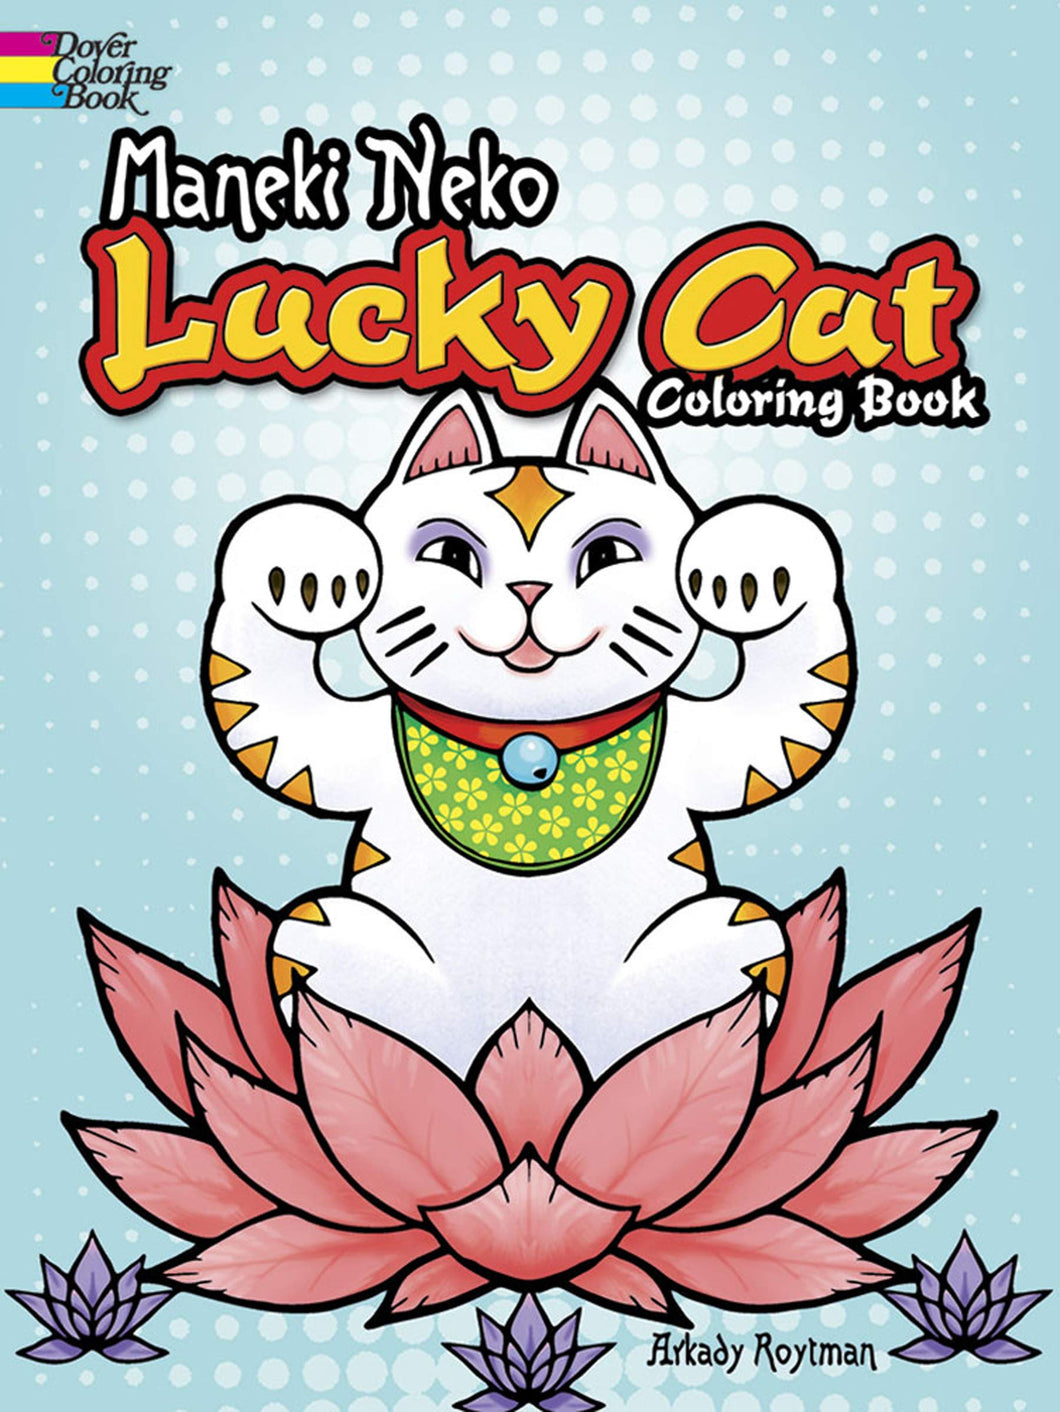 Maneki Neko Lucky Cat Coloring Book by Arkady Roytman